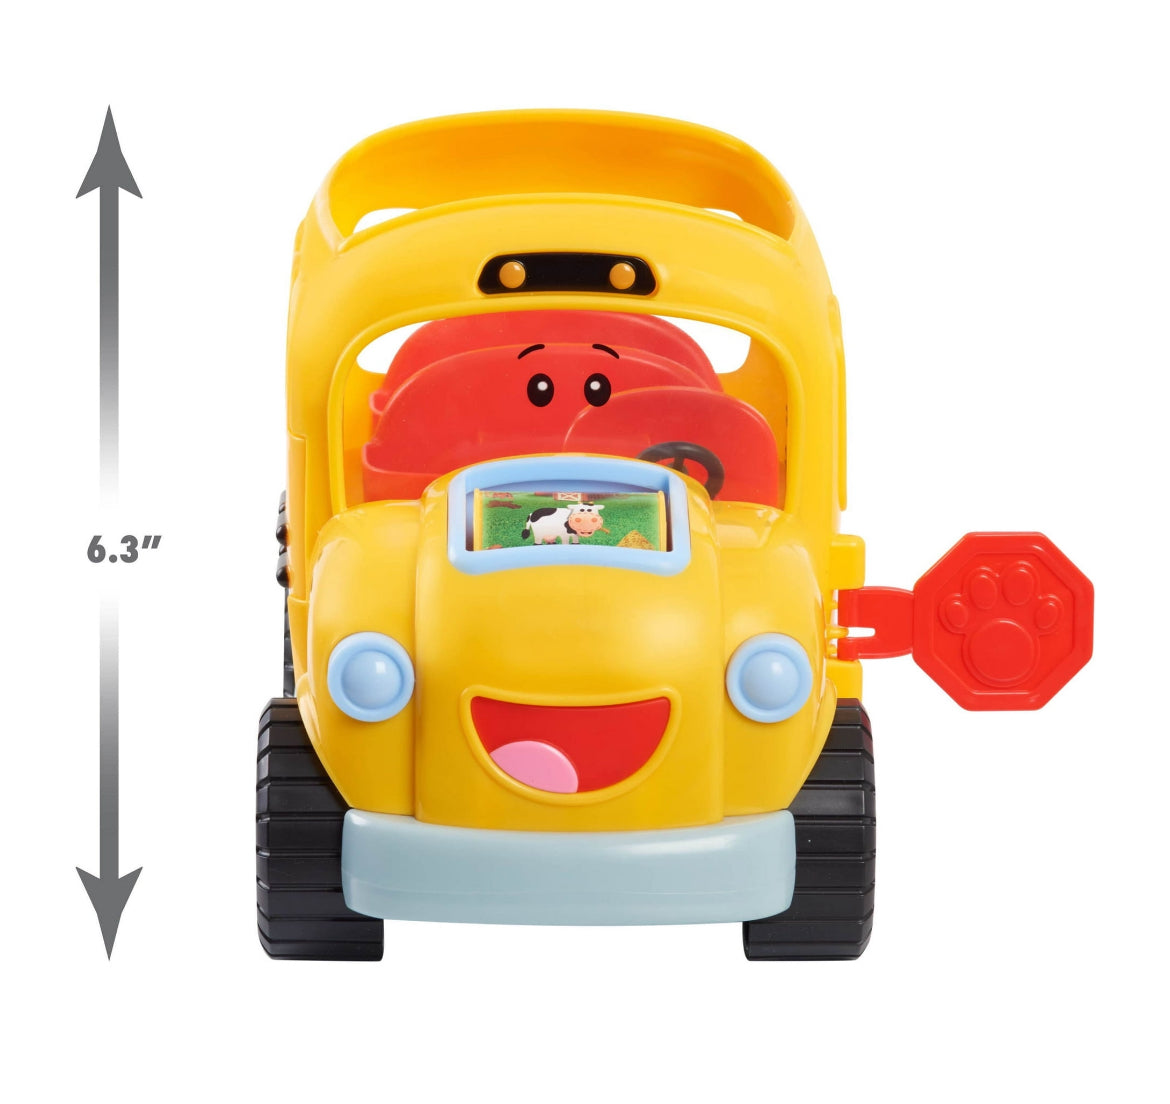 LeapFrog LeapBuilders Soar and Zoom Vehicles Learning Blocks Toy